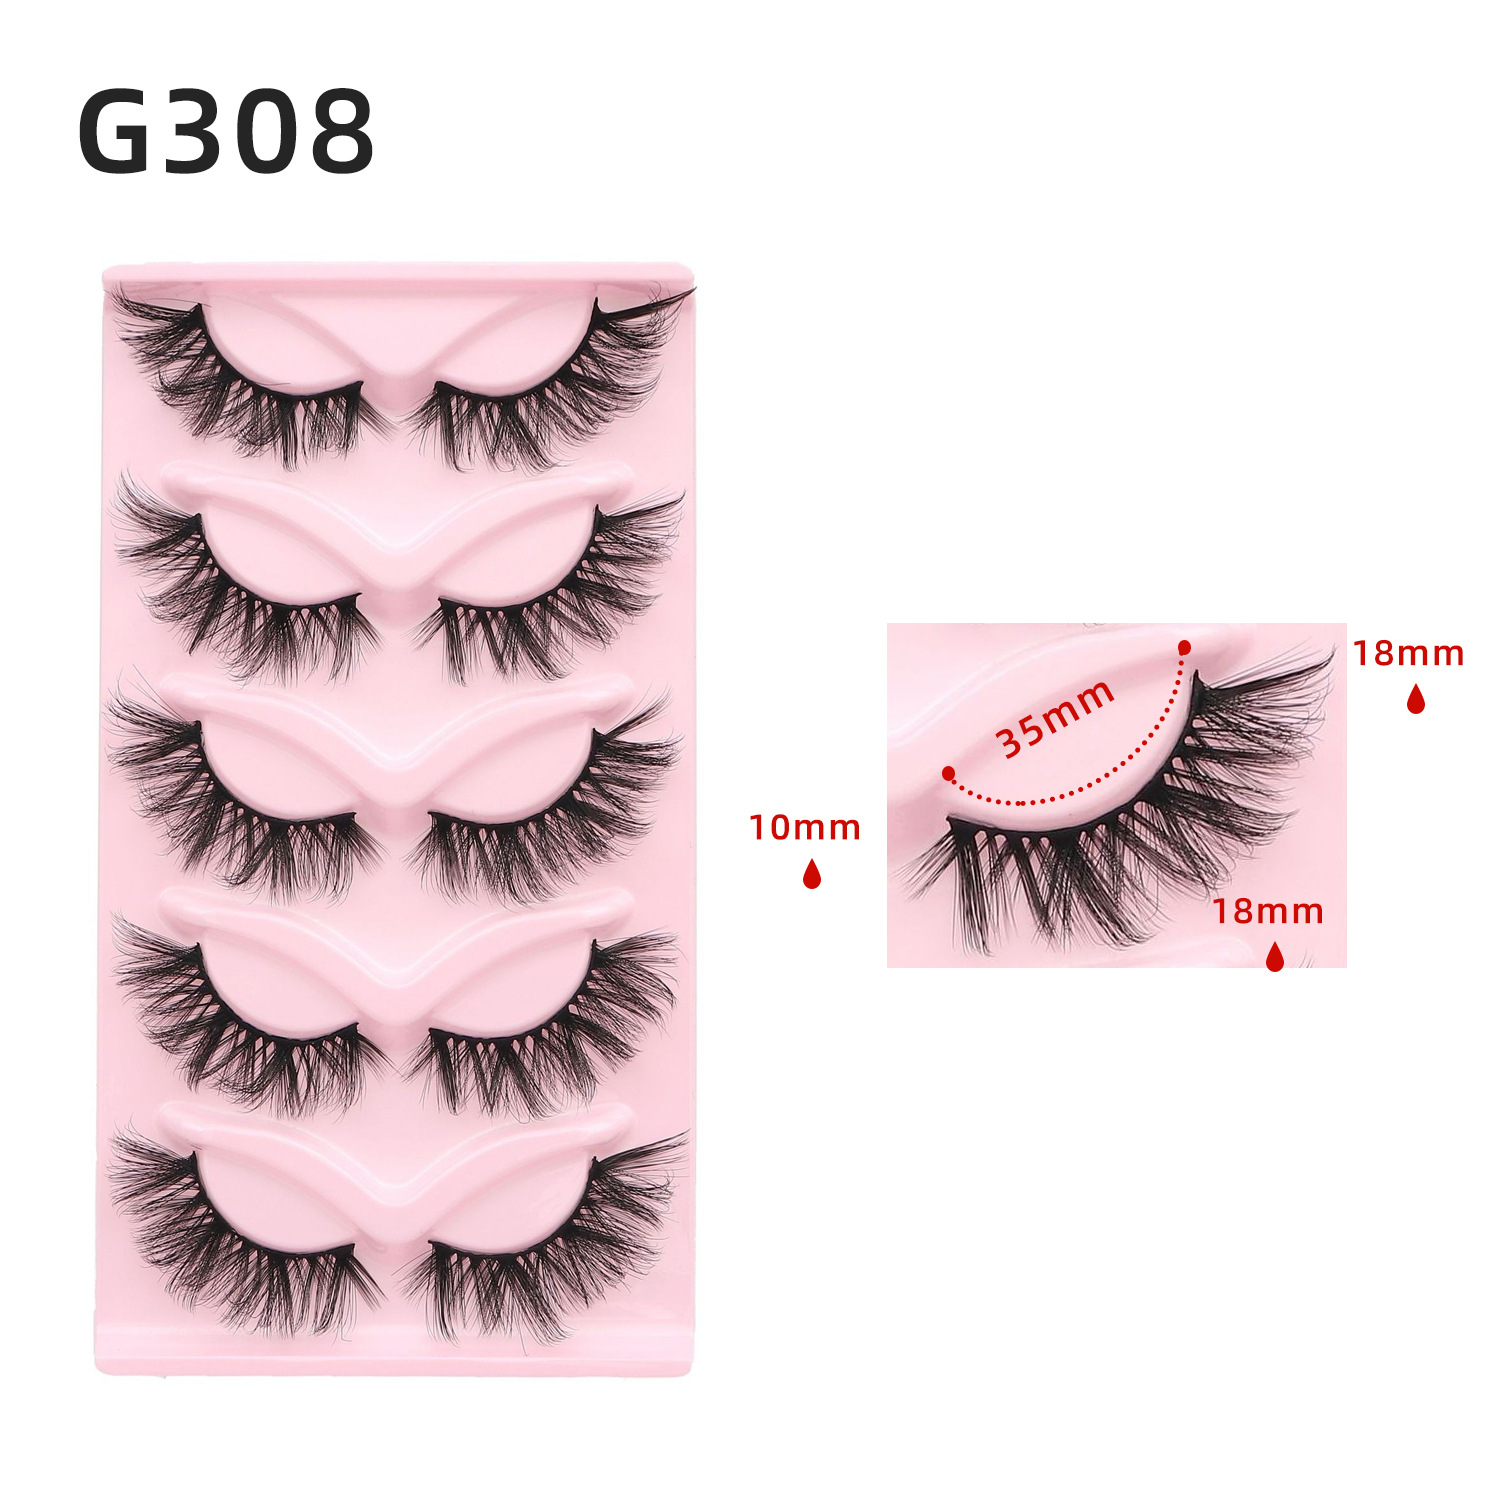 G308.jpg